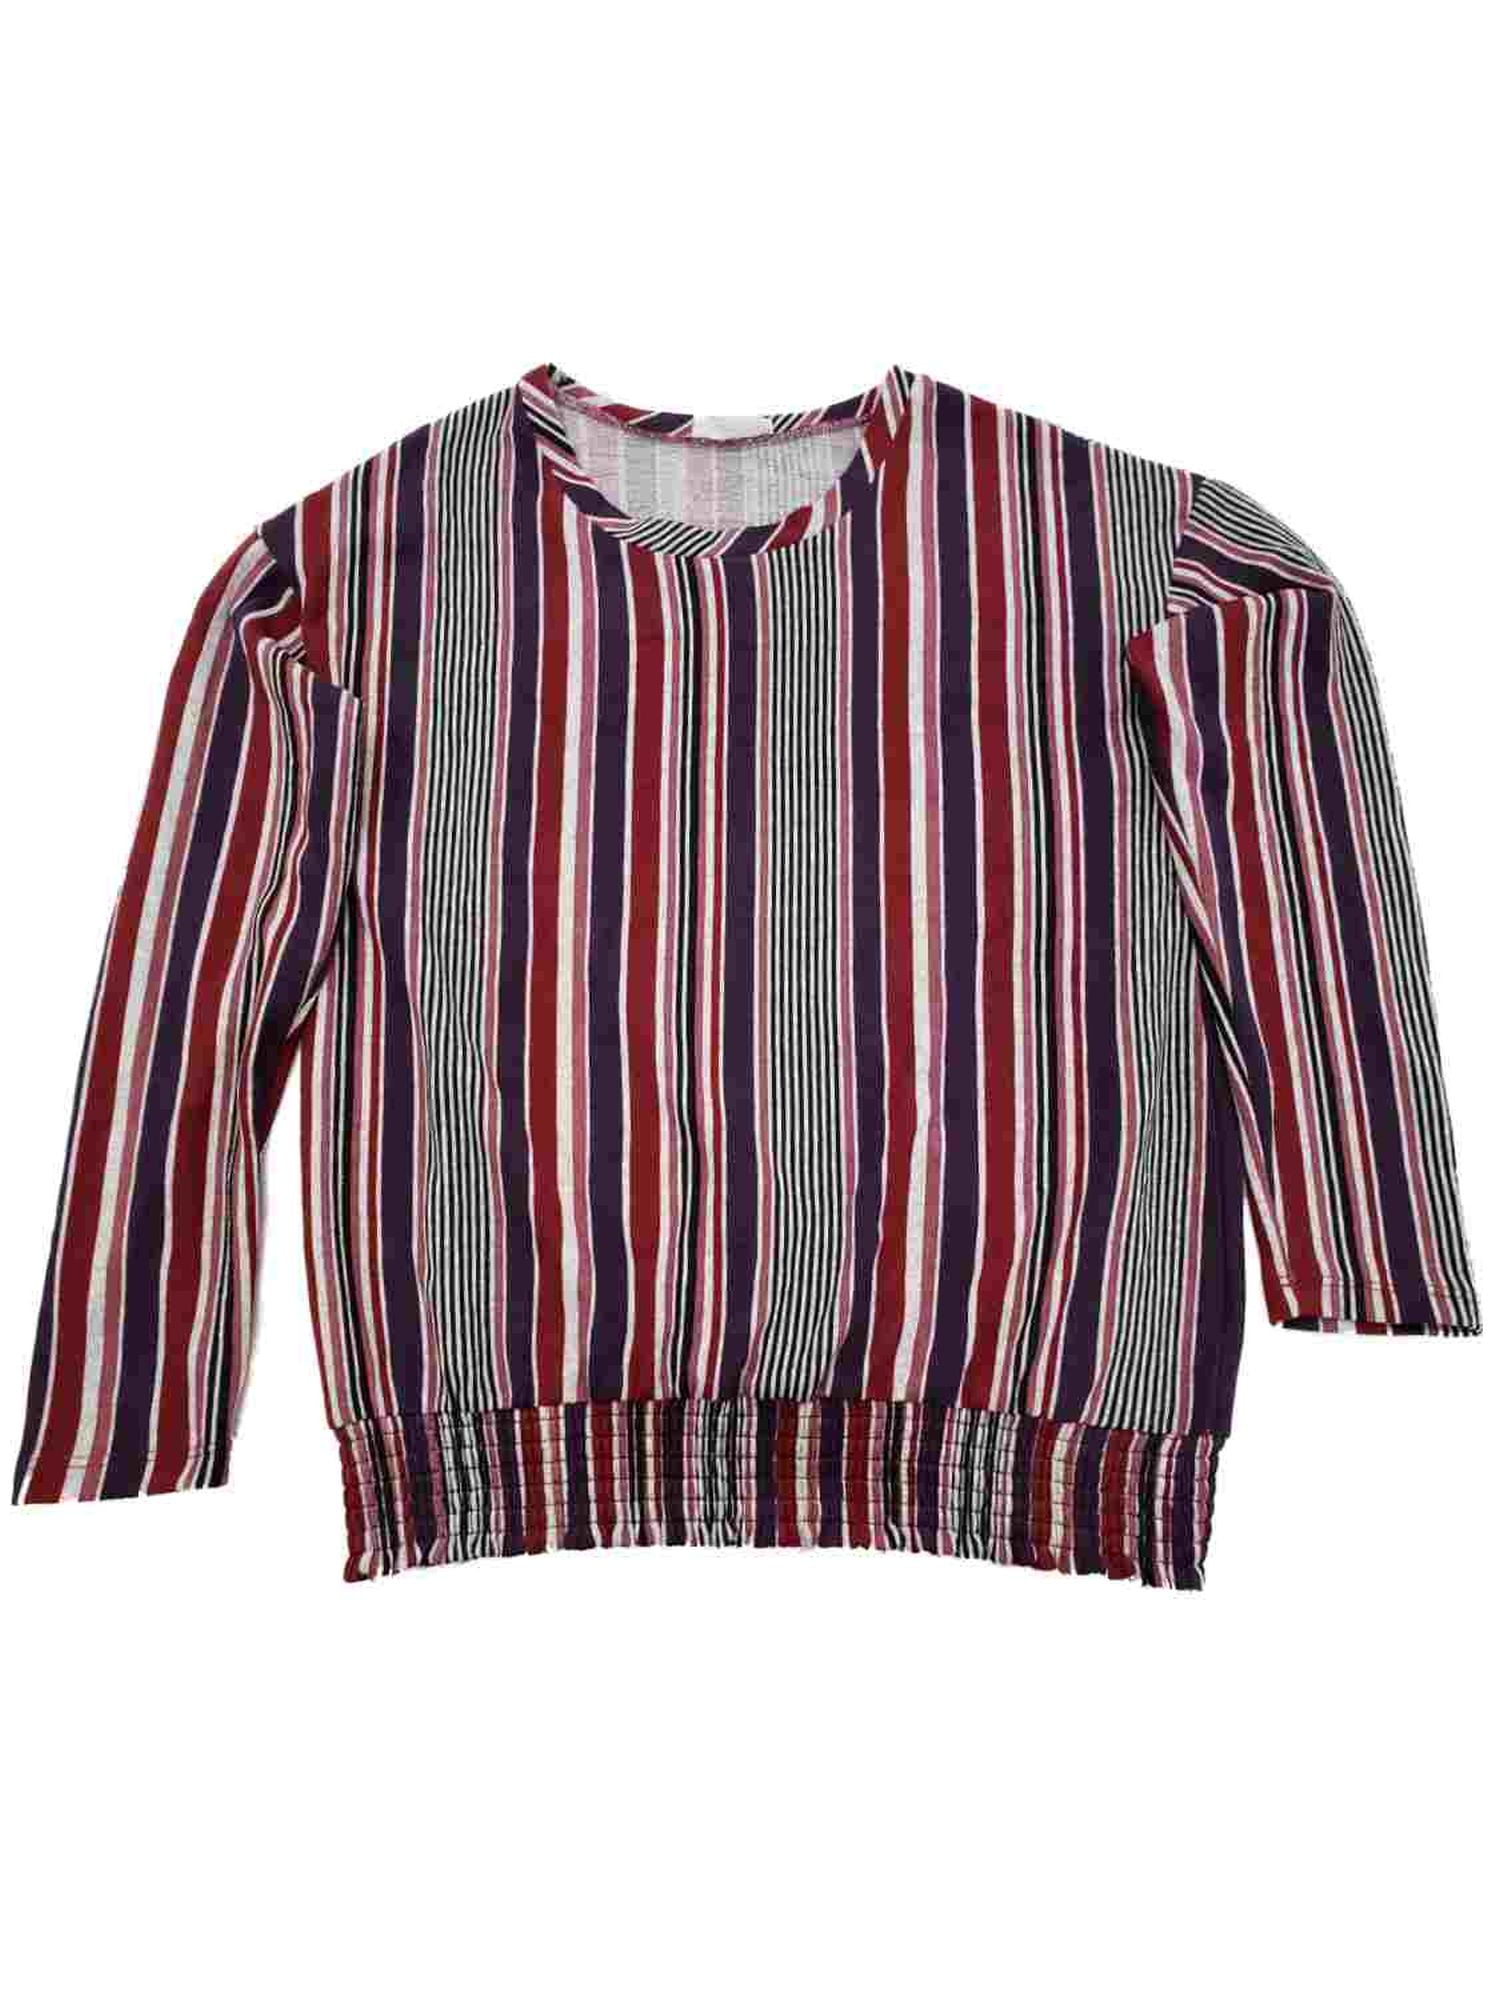 burgundy striped shirt womens